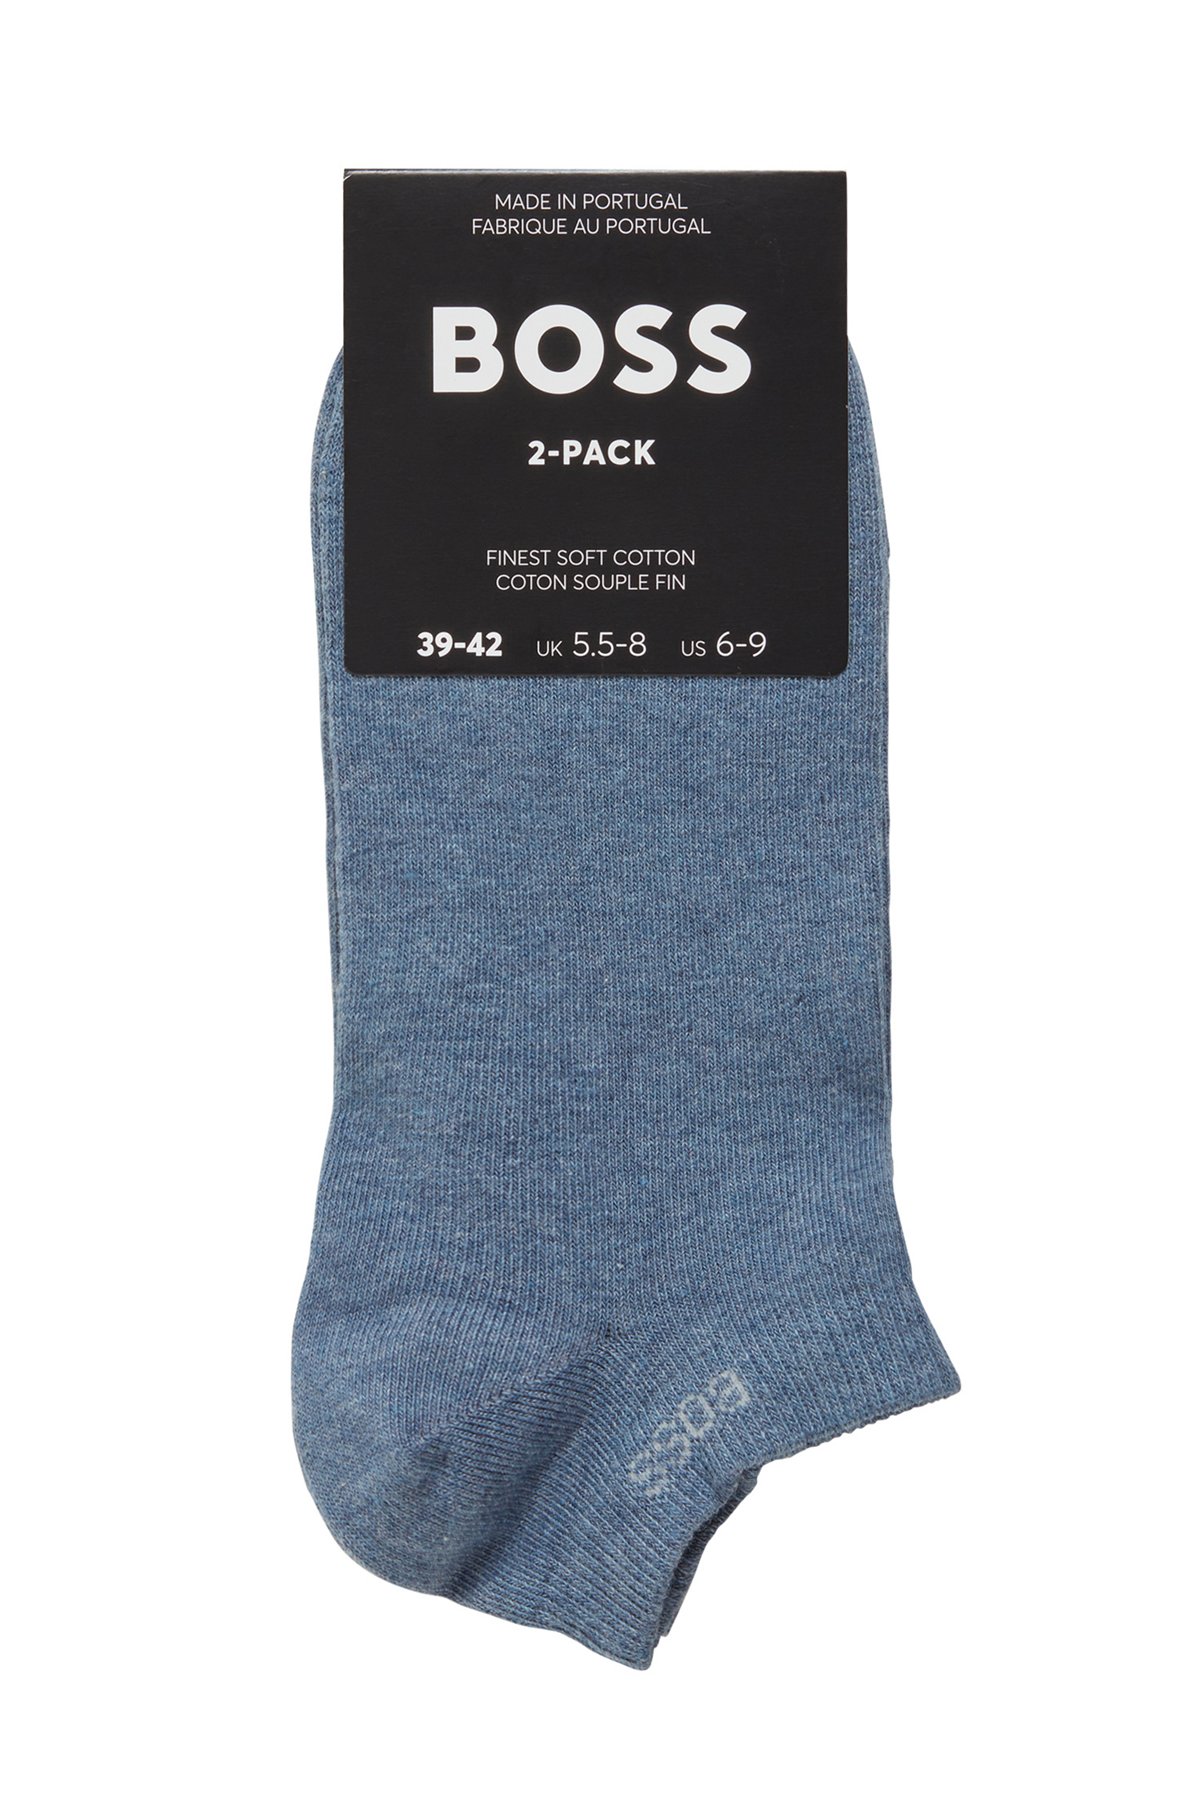 Zweier-Pack Sneakers-Socken aus Baumwoll-Mix, Blau